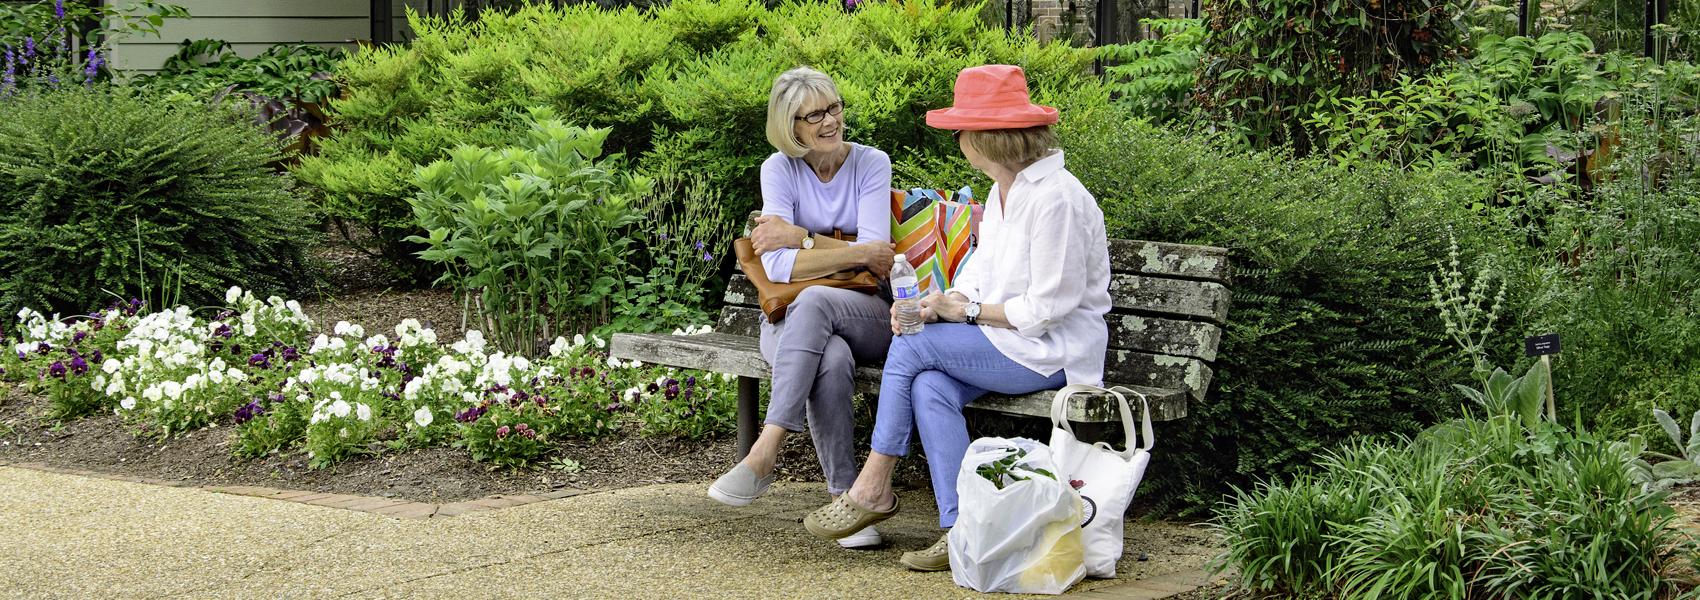 Two people rest on a bench alongside a garden